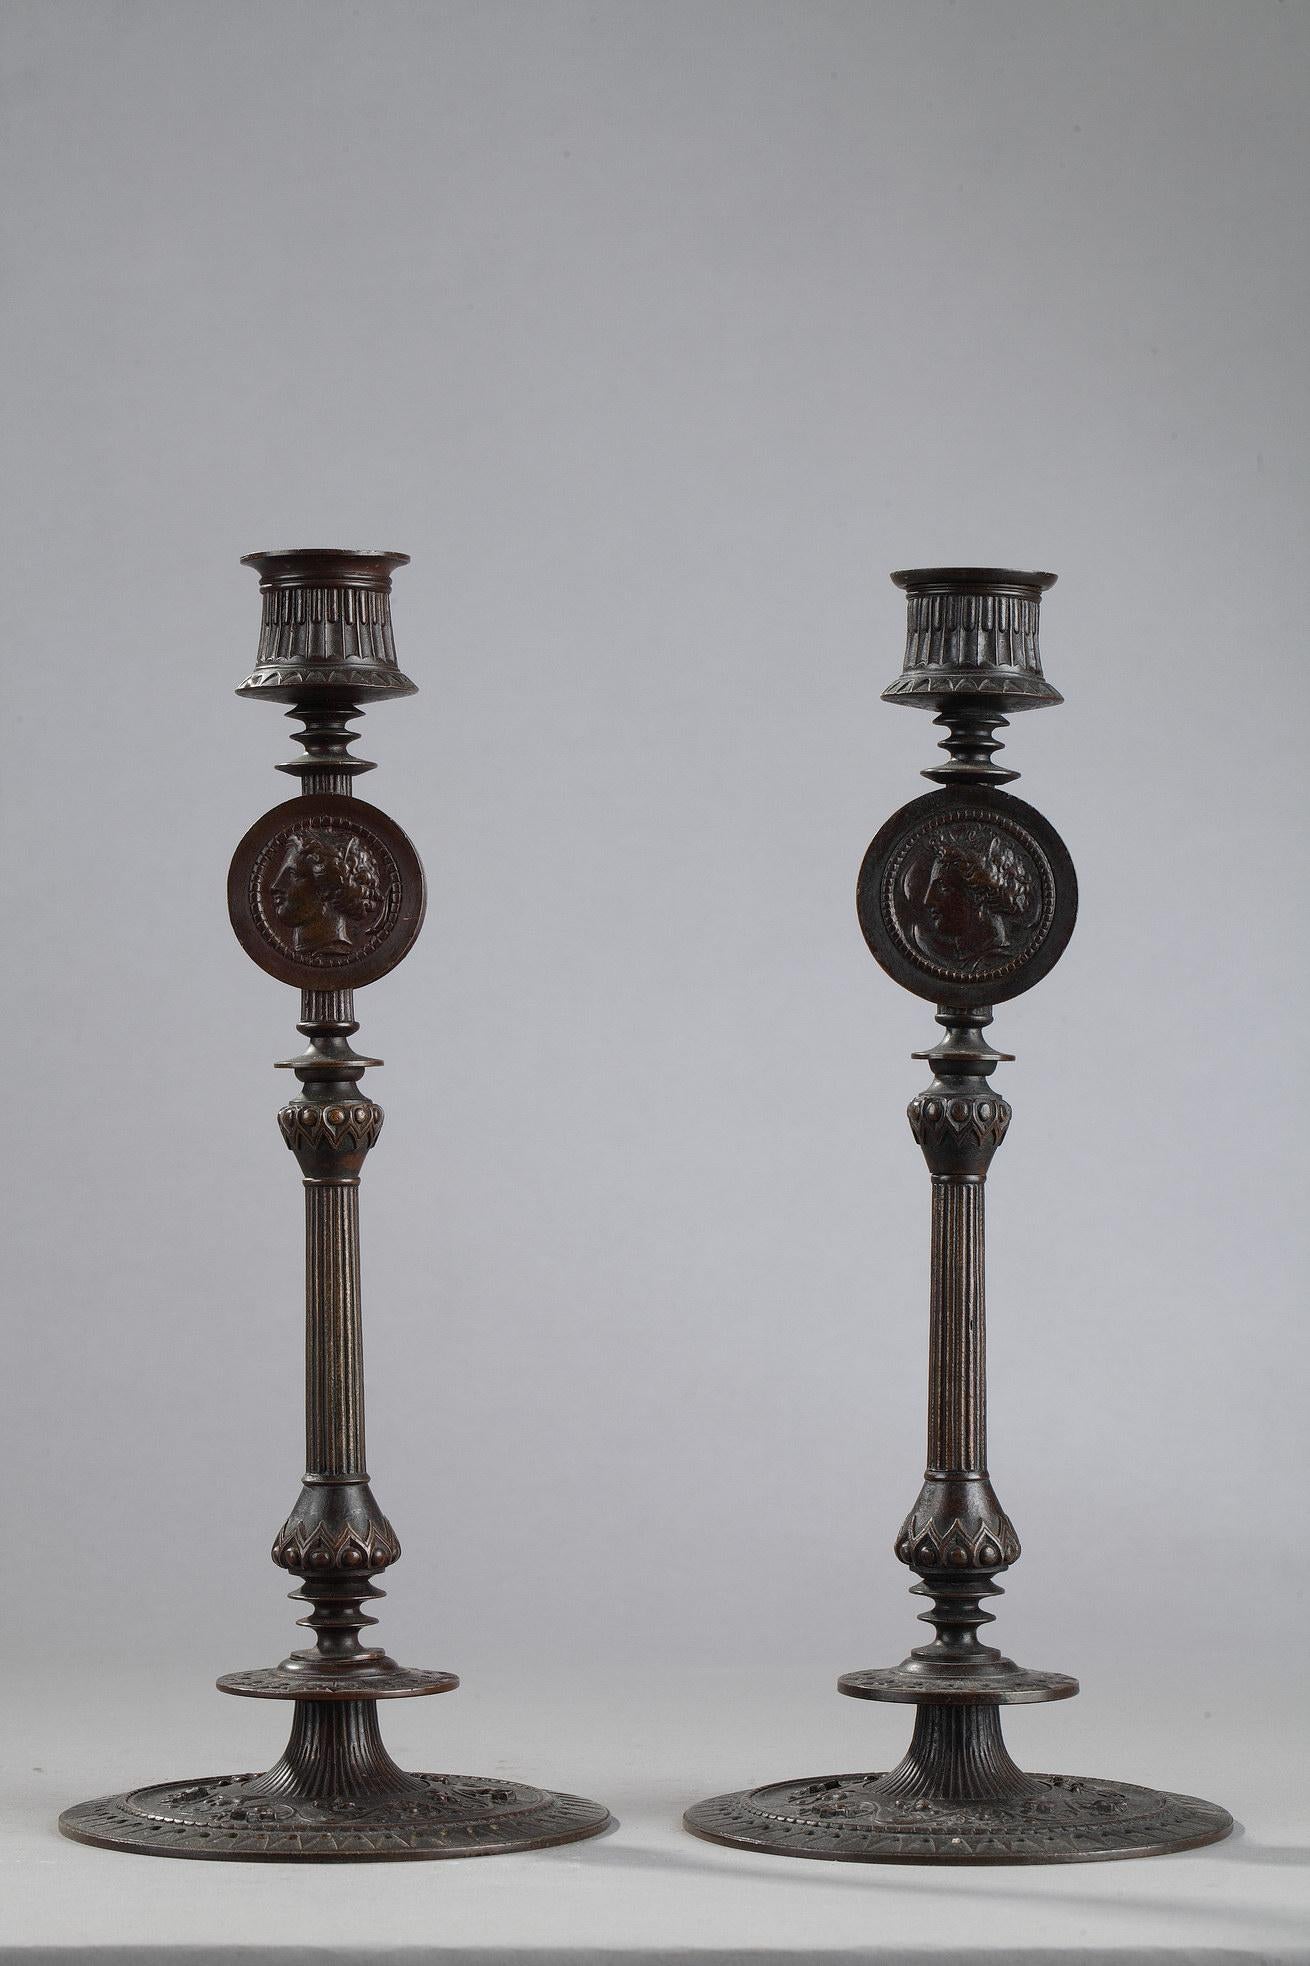 Pair of Candlesticks - Sculpture by Antoine-Louis Barye